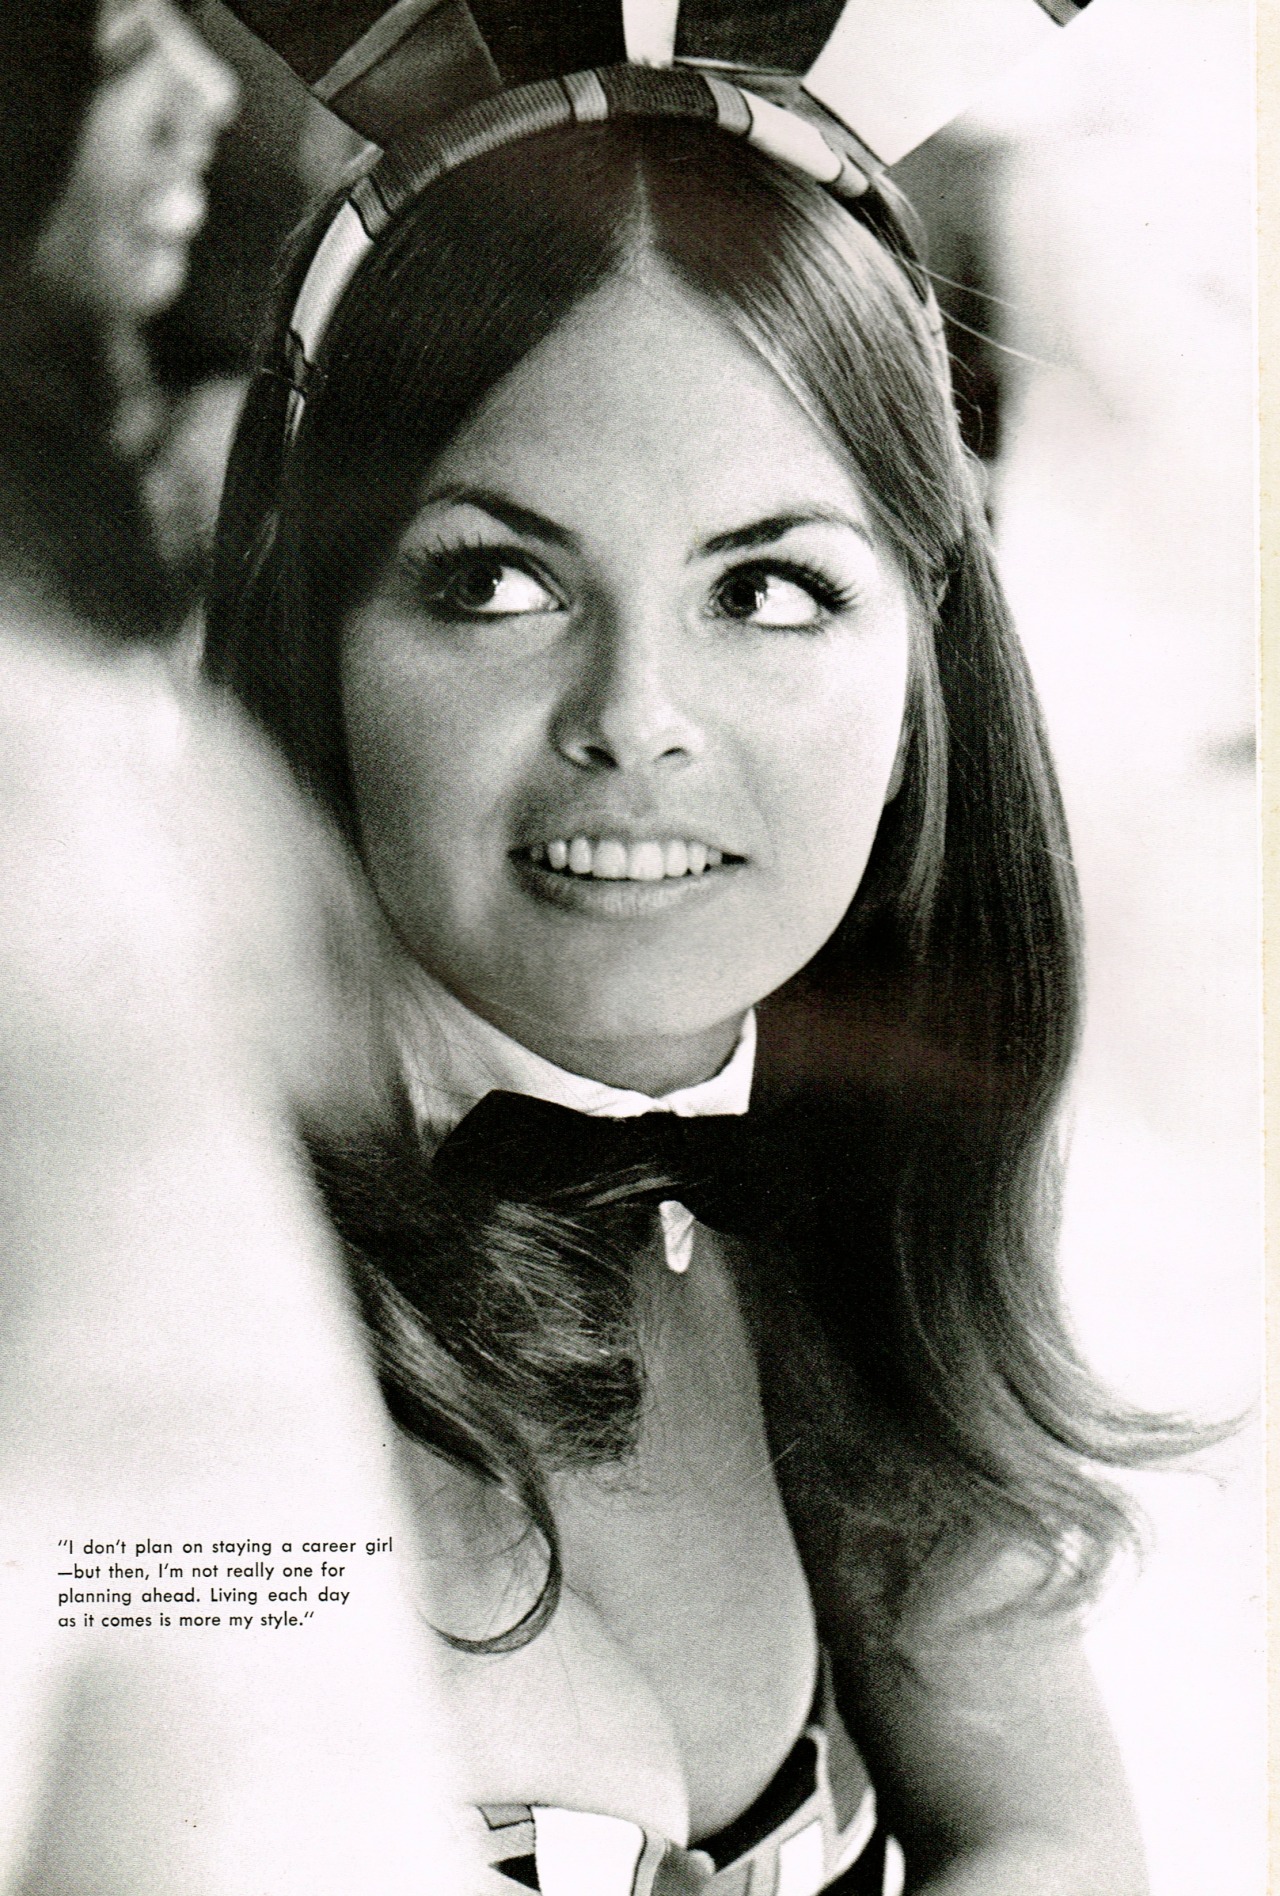 craparoundthehouse46:   Playboy July 1971 - Playmate - Heather Van Every 